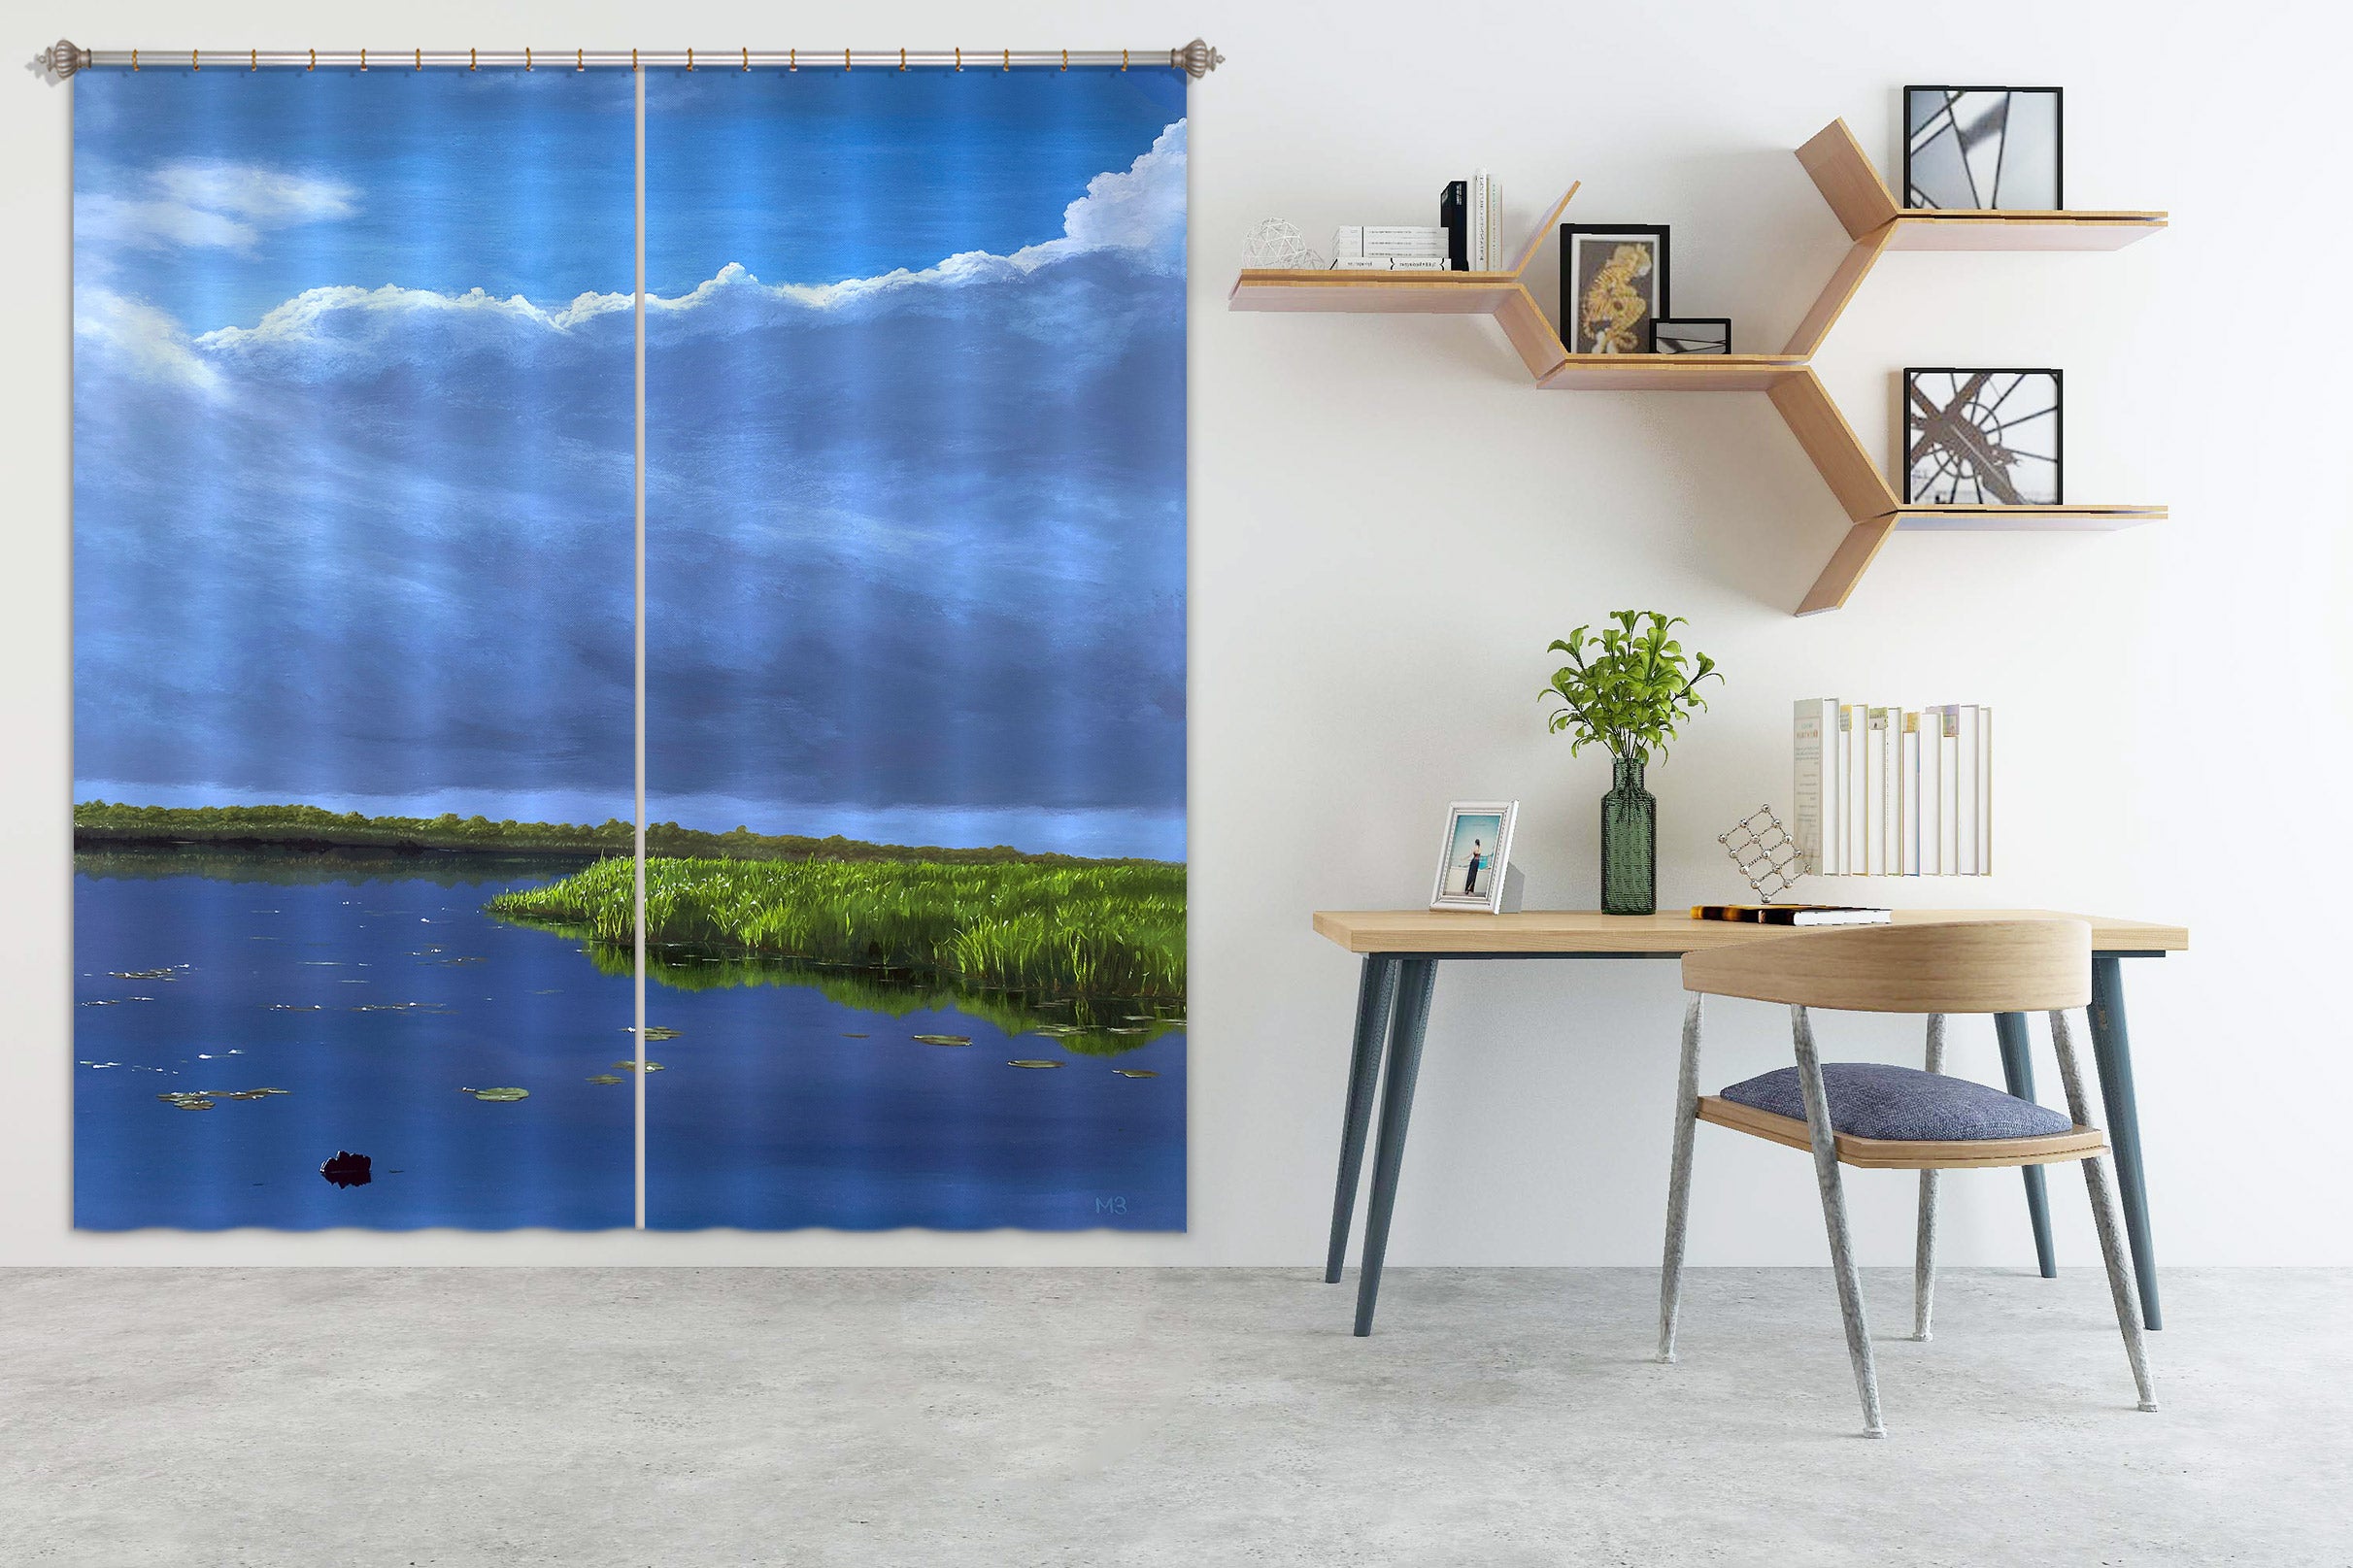 3D Lakeside Meadow 9763 Marina Zotova Curtain Curtains Drapes